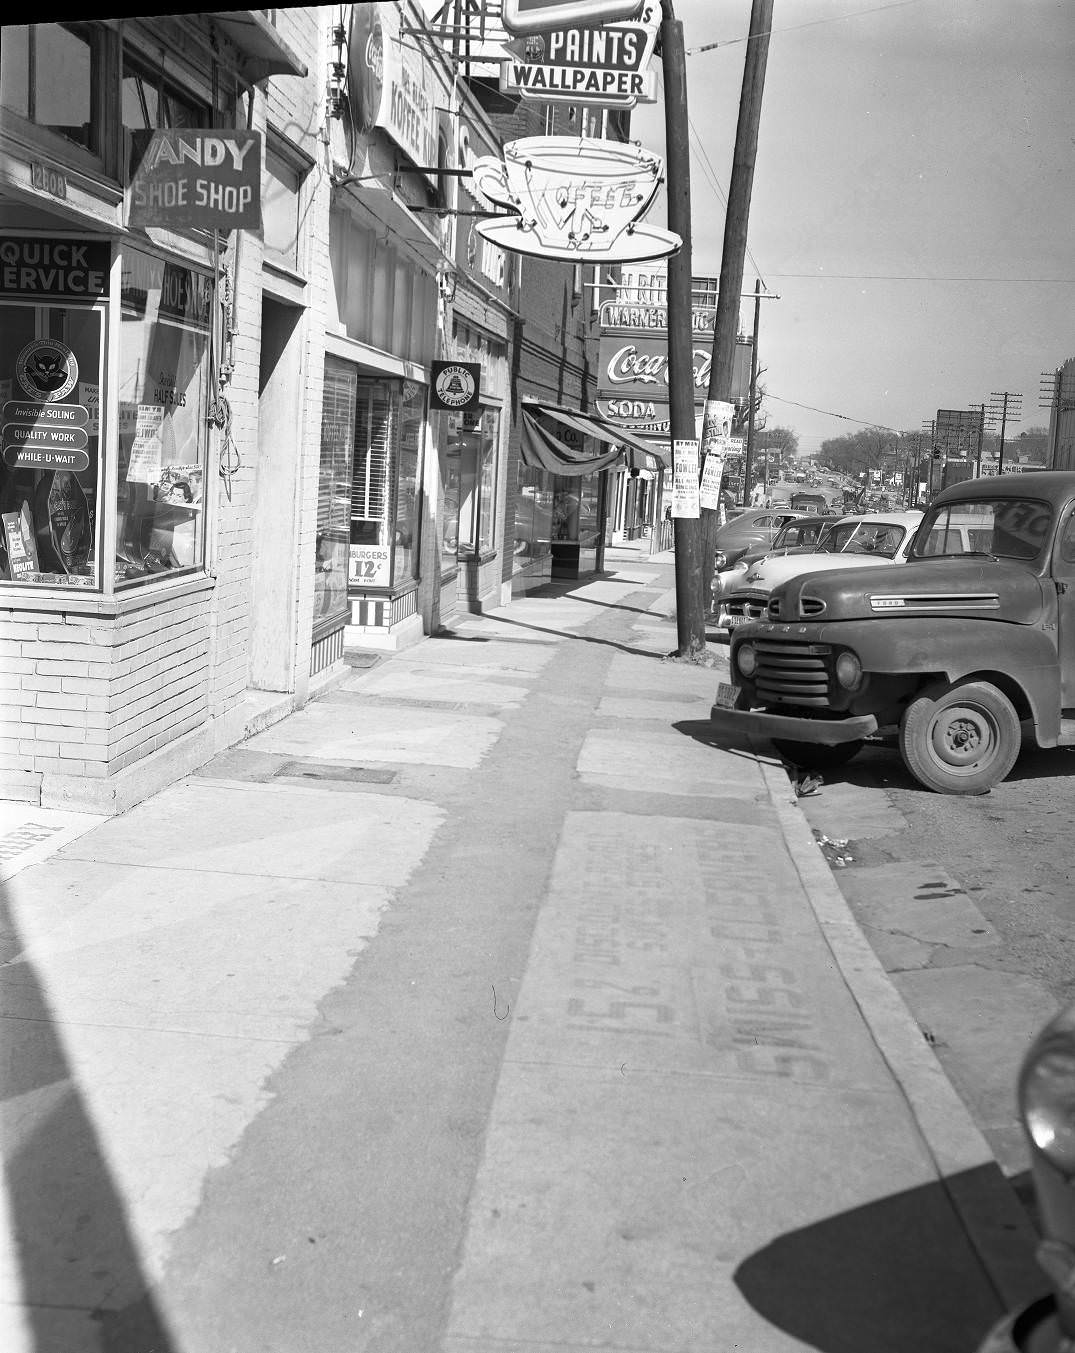 Koffee Kup on West End Avenue, 1953